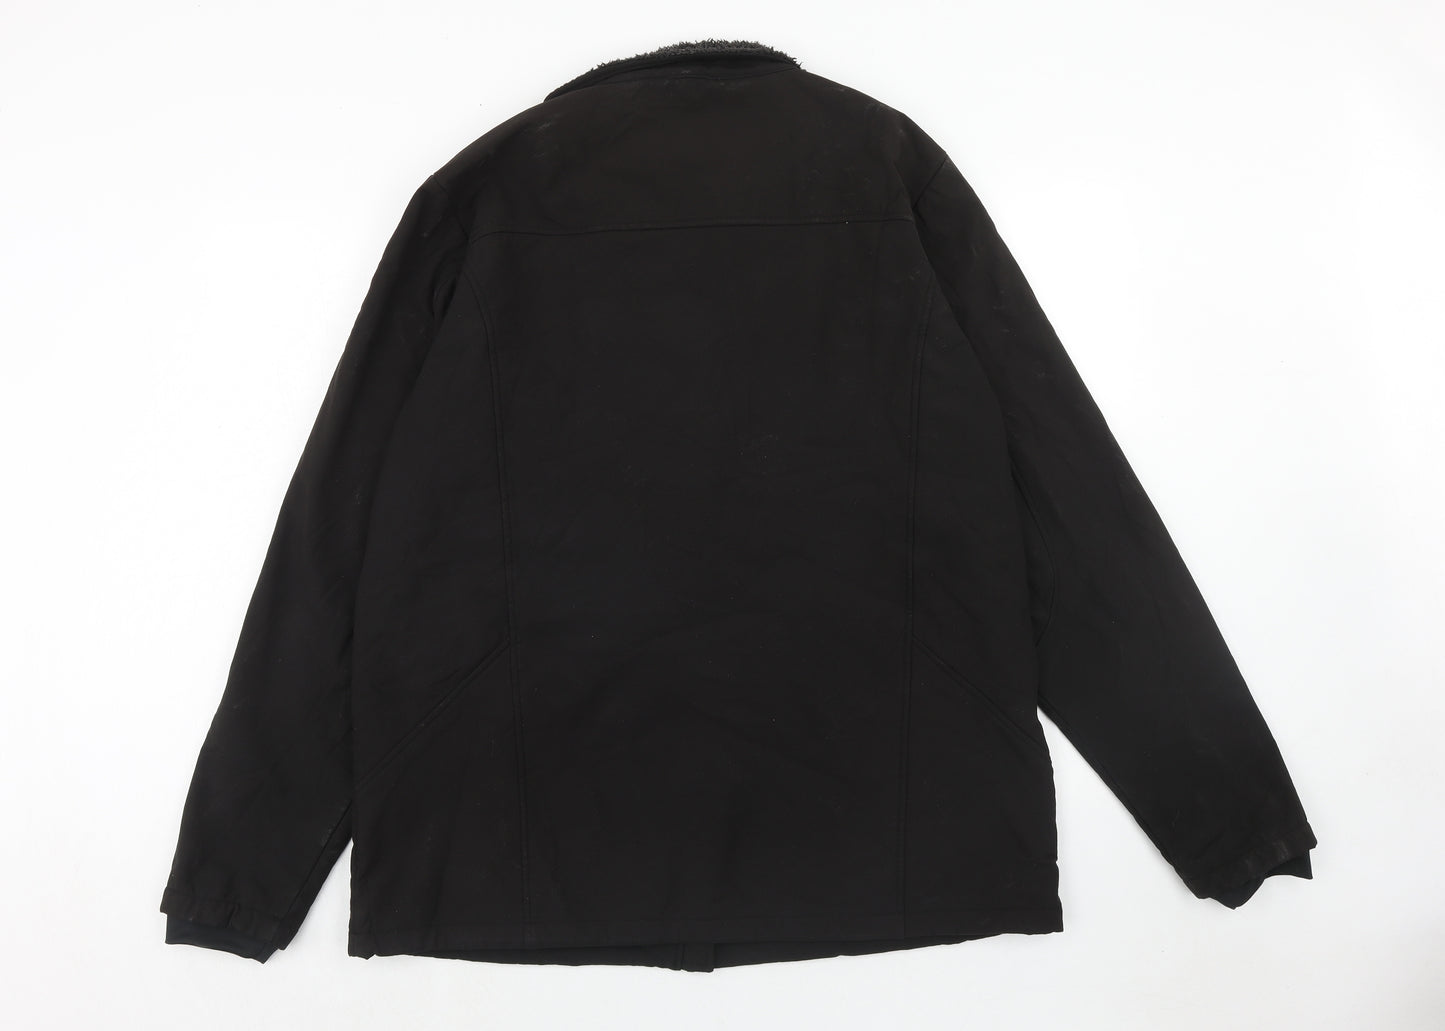 Peter Storm Mens Black Jacket Size 2XL Zip